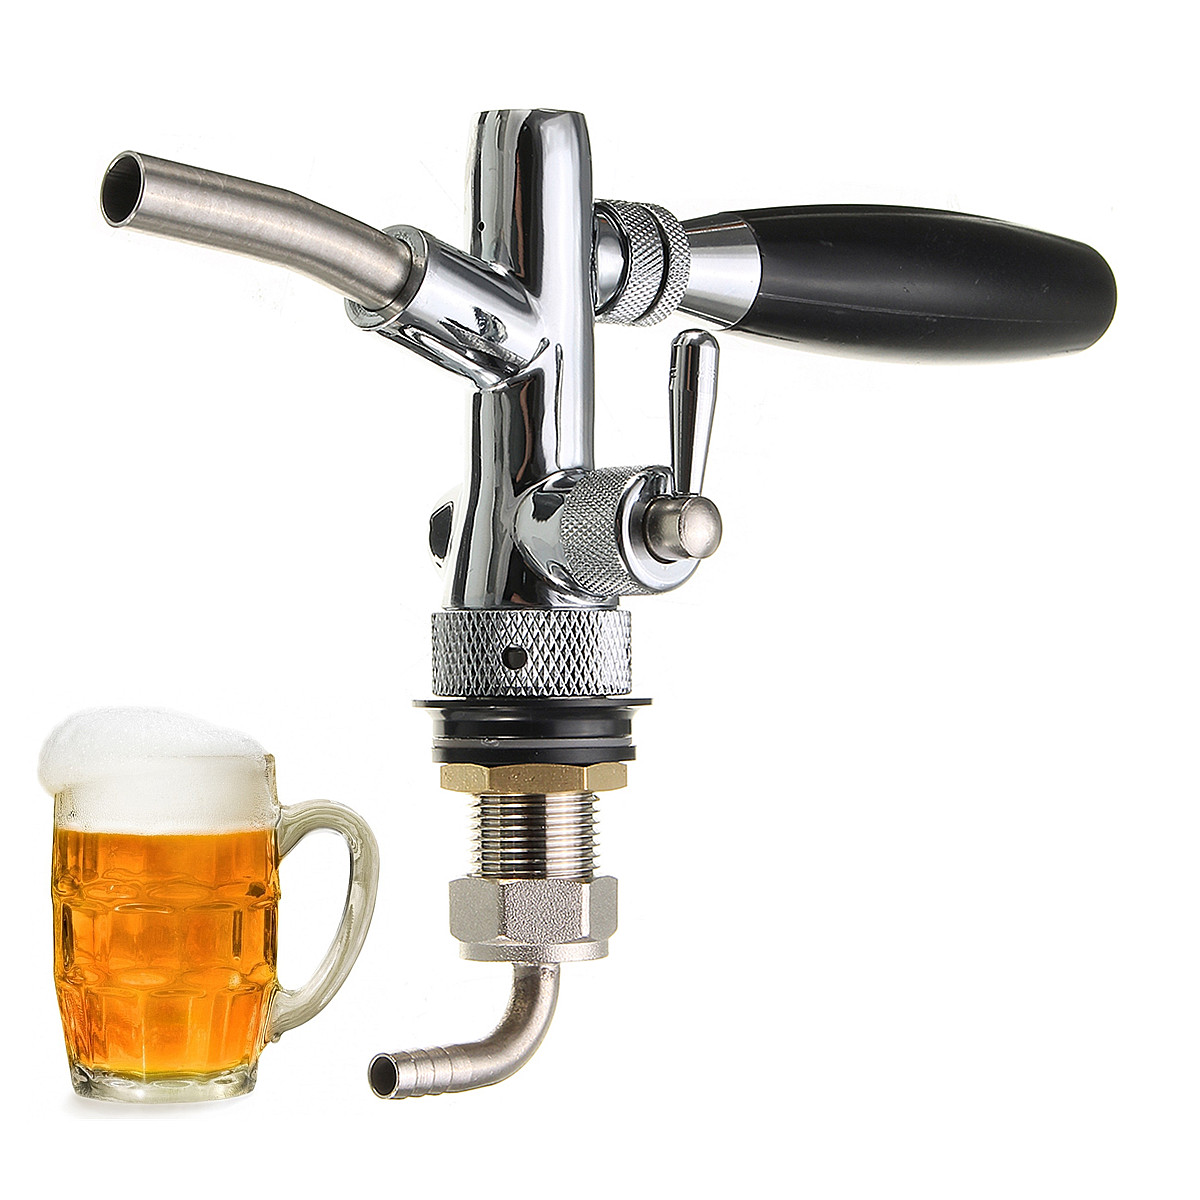 Adjustable-Draft-Beer-Faucet-Home-Brew-Dispenser-with-Flow-Controller-For-Keg-Tap-G58-Shank-1162834